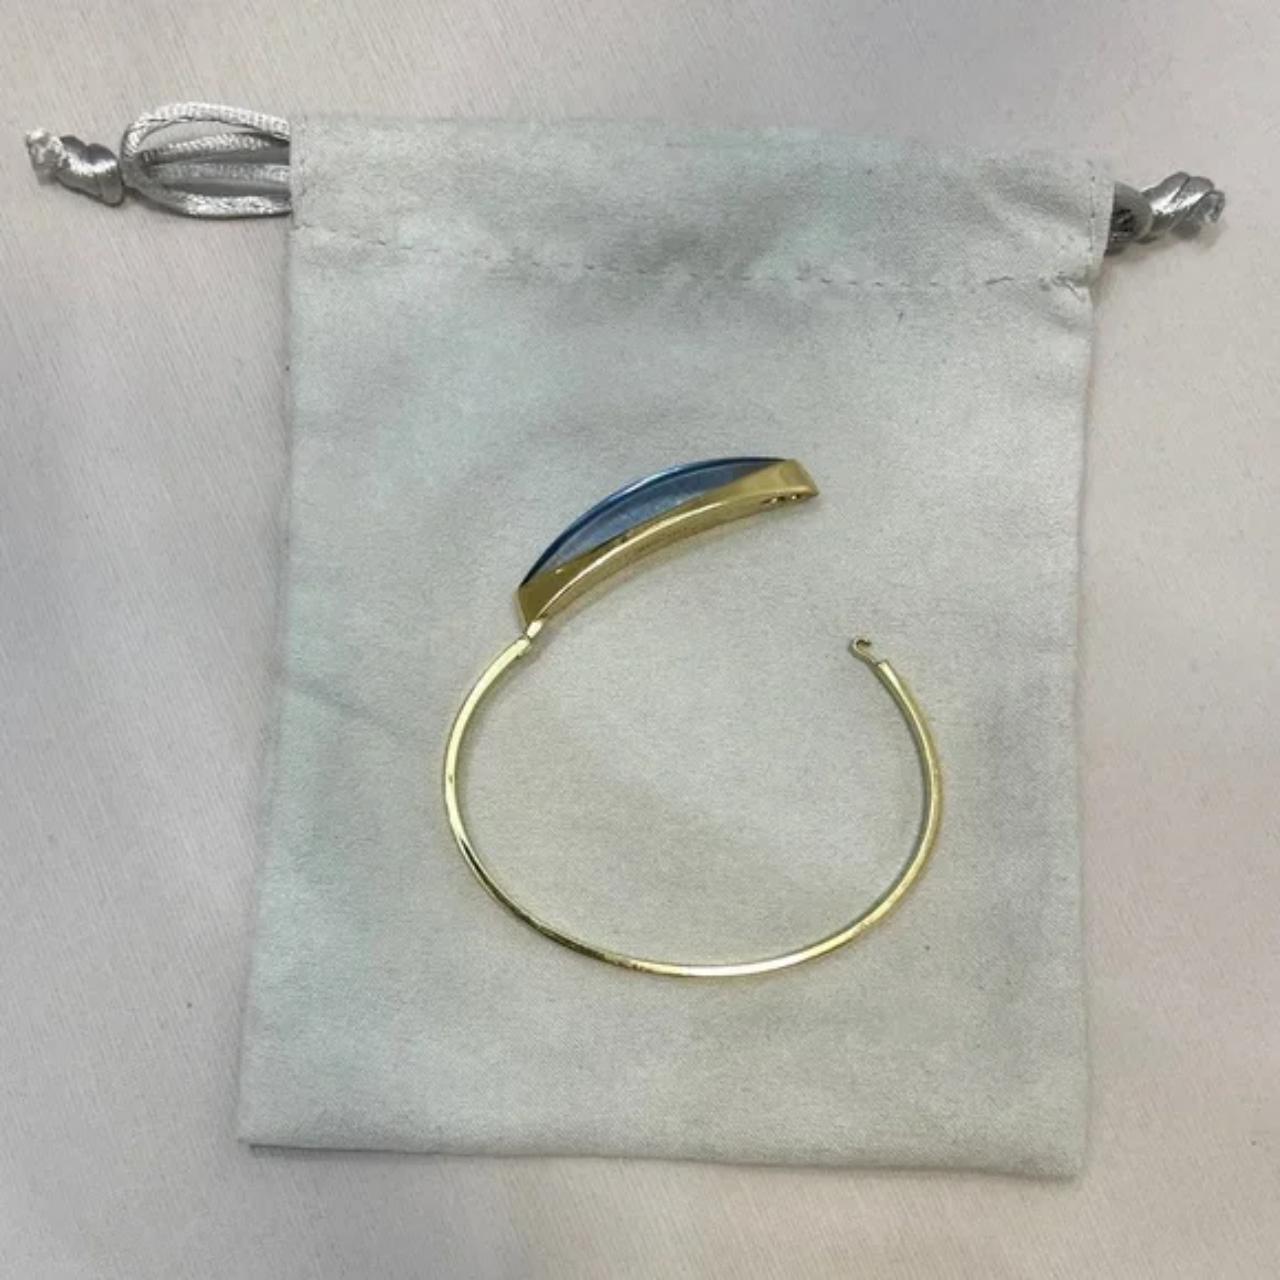 Product Image 2 - Lalique Eclat Crystal Bracelet Bangle

Blue